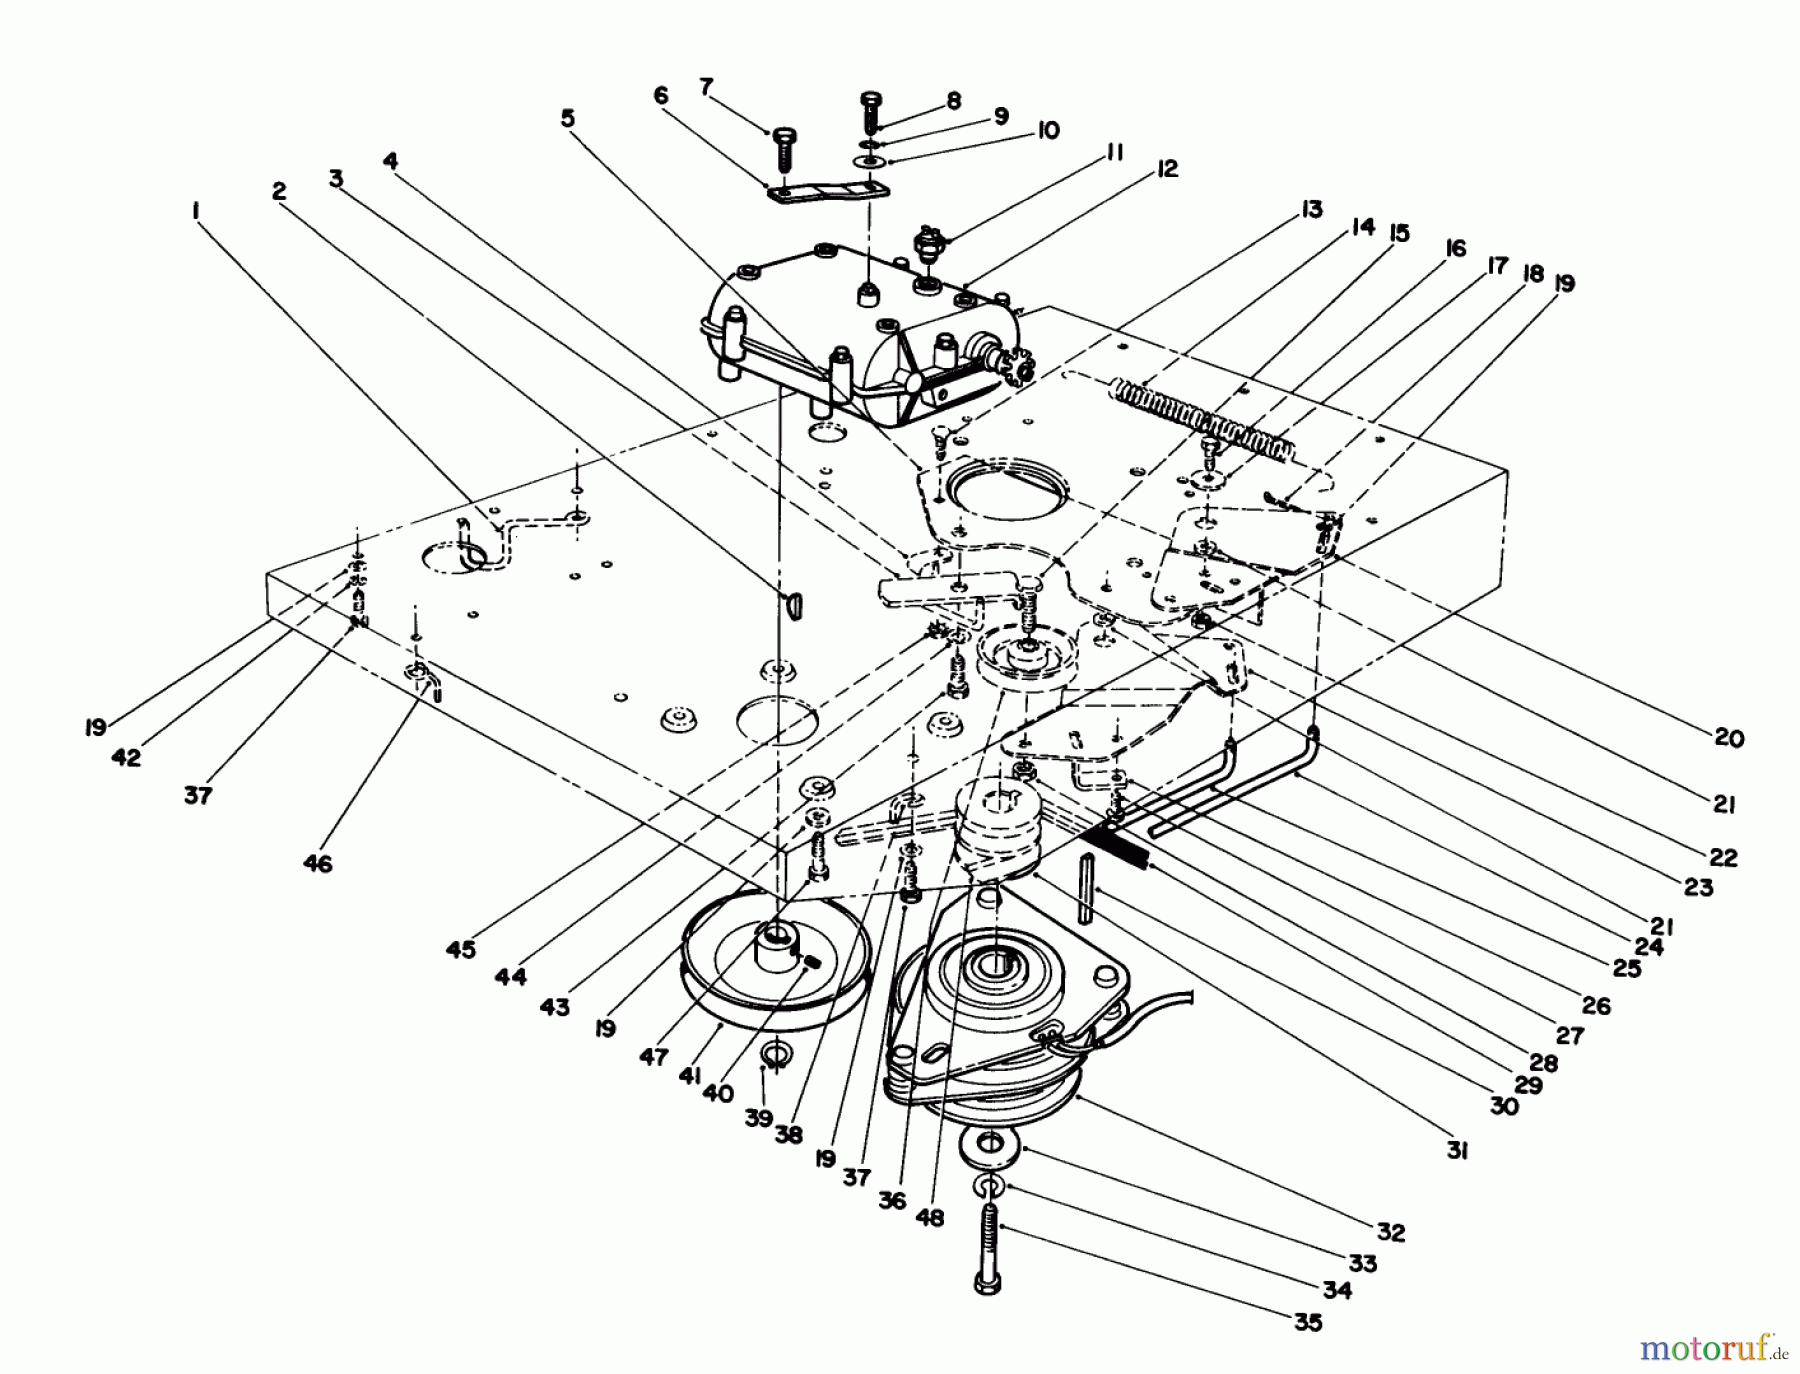  Toro Neu Mowers, Rear-Engine Rider 55600 - Toro HMR-1200, 1989 (9000001-9999999) TRANSMISSION & CLUTCH ASSEMBLY